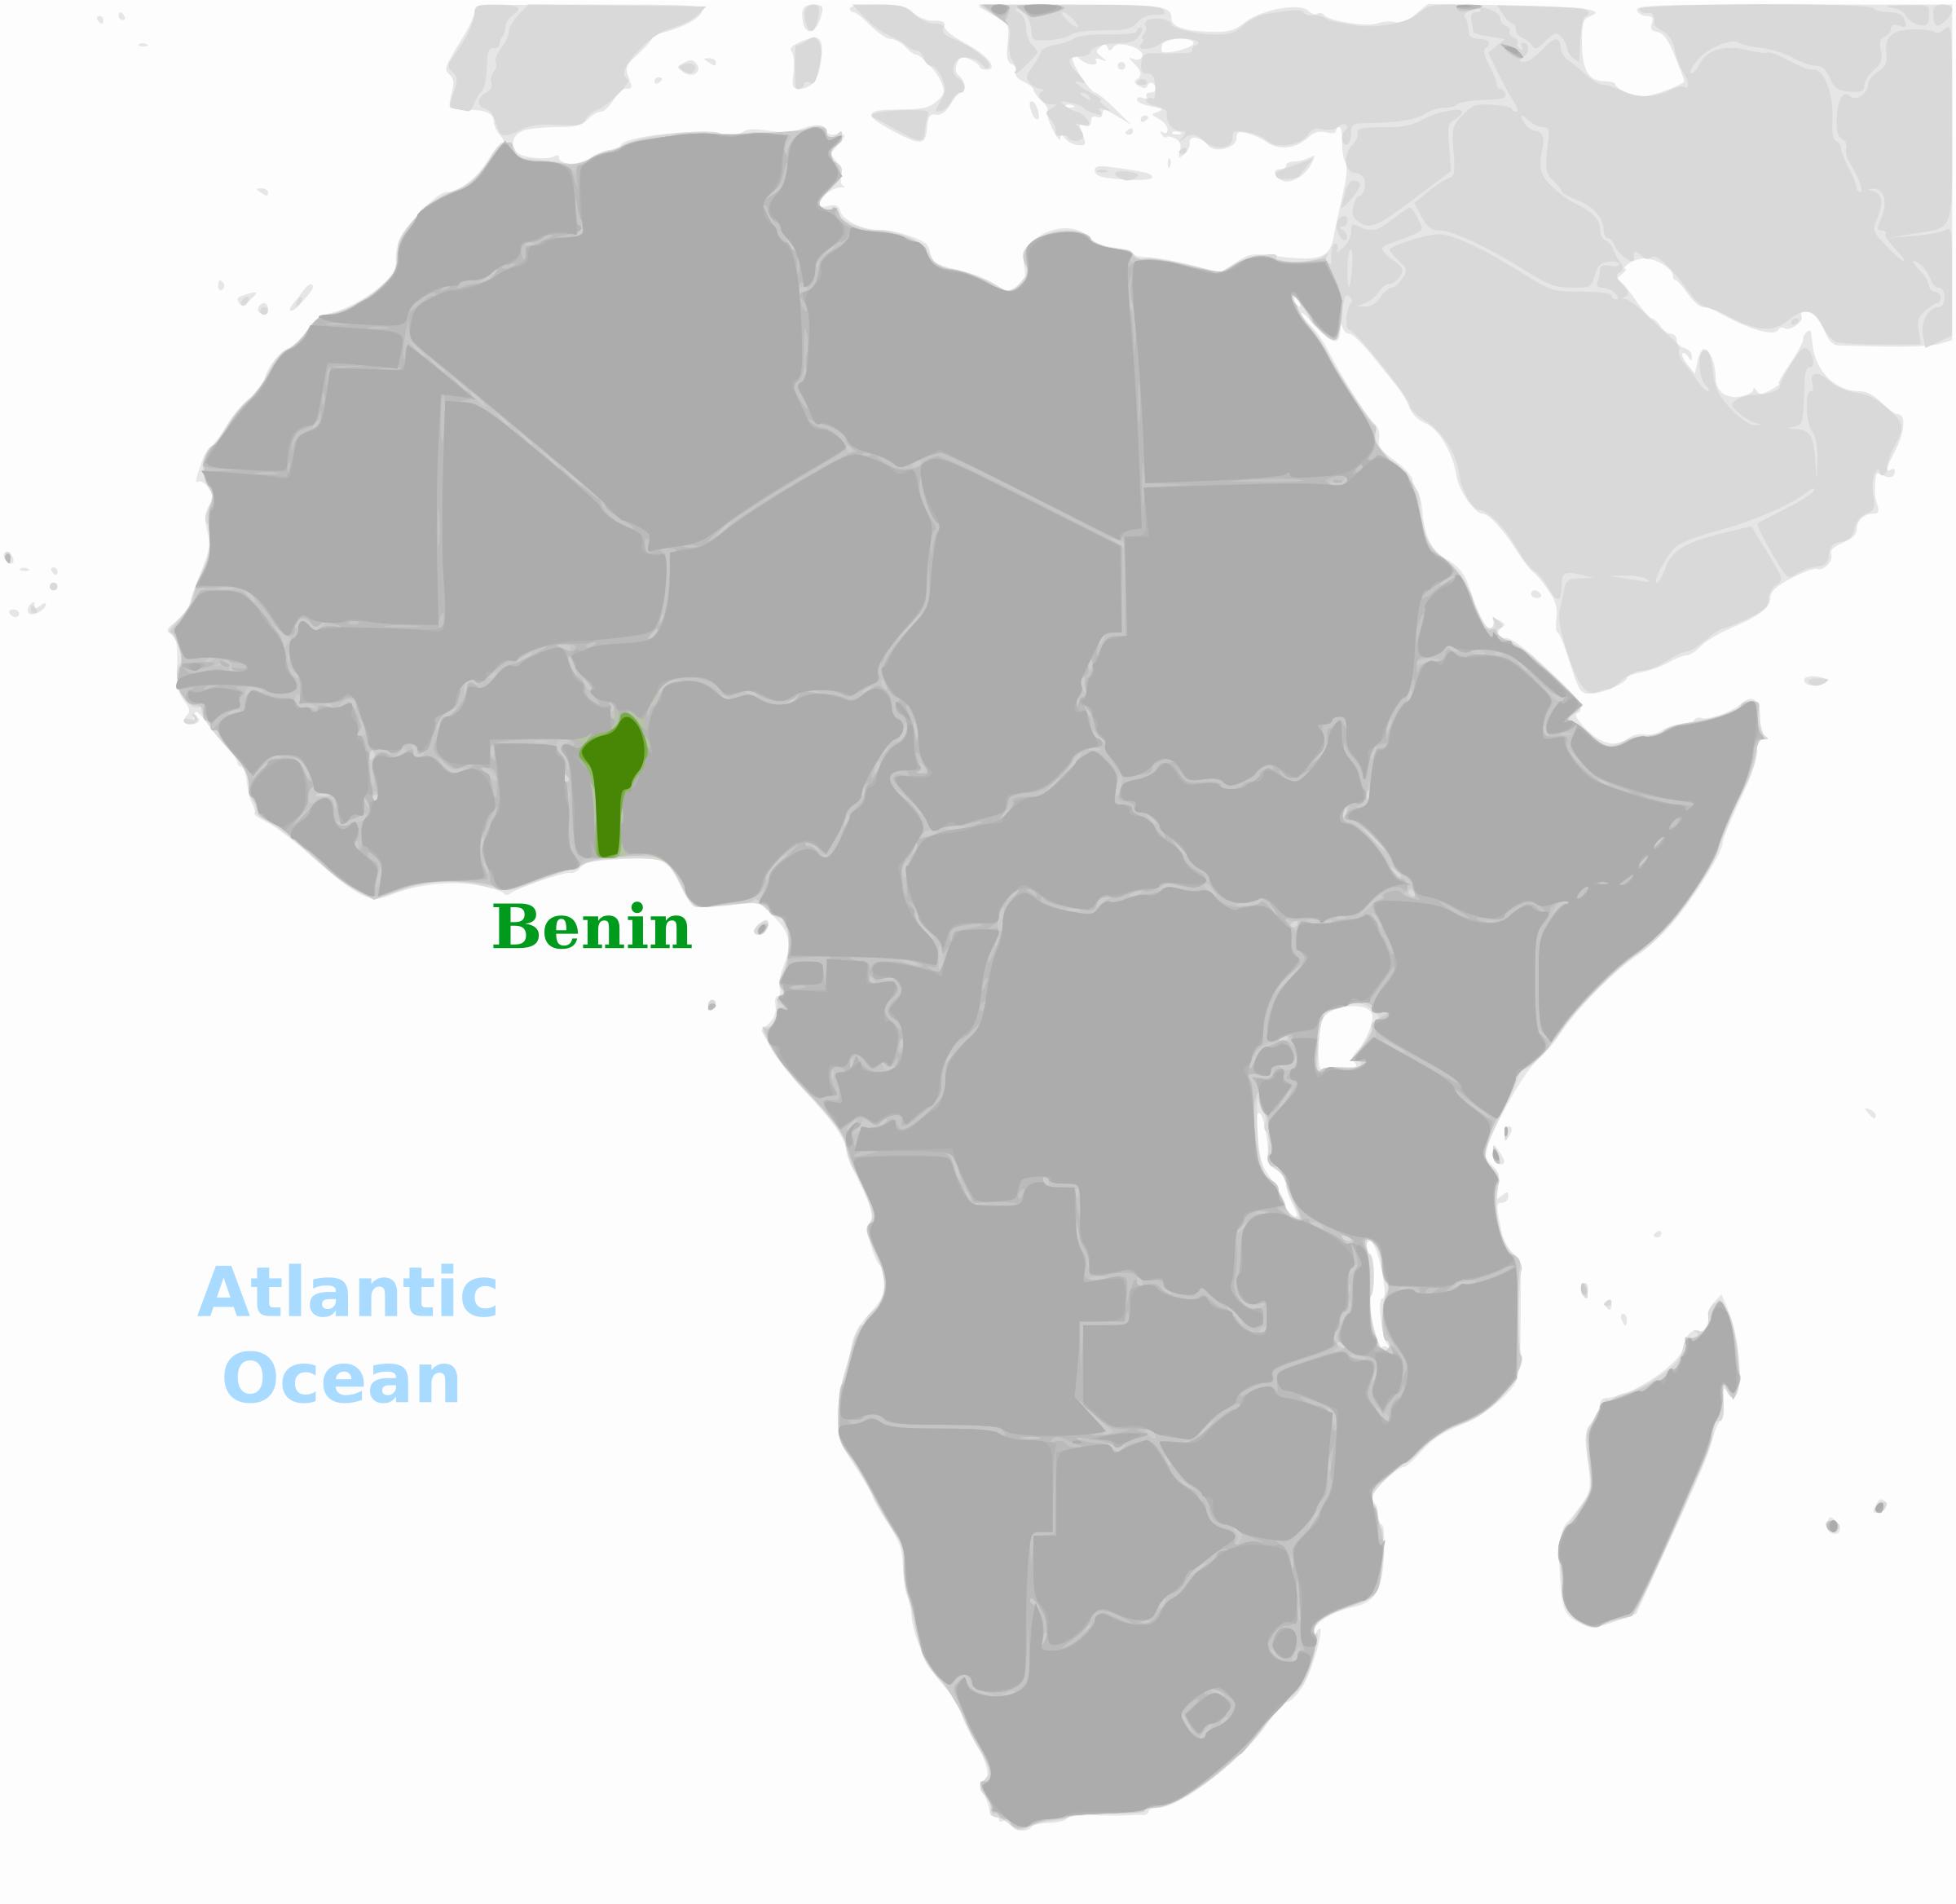 Benin location label png